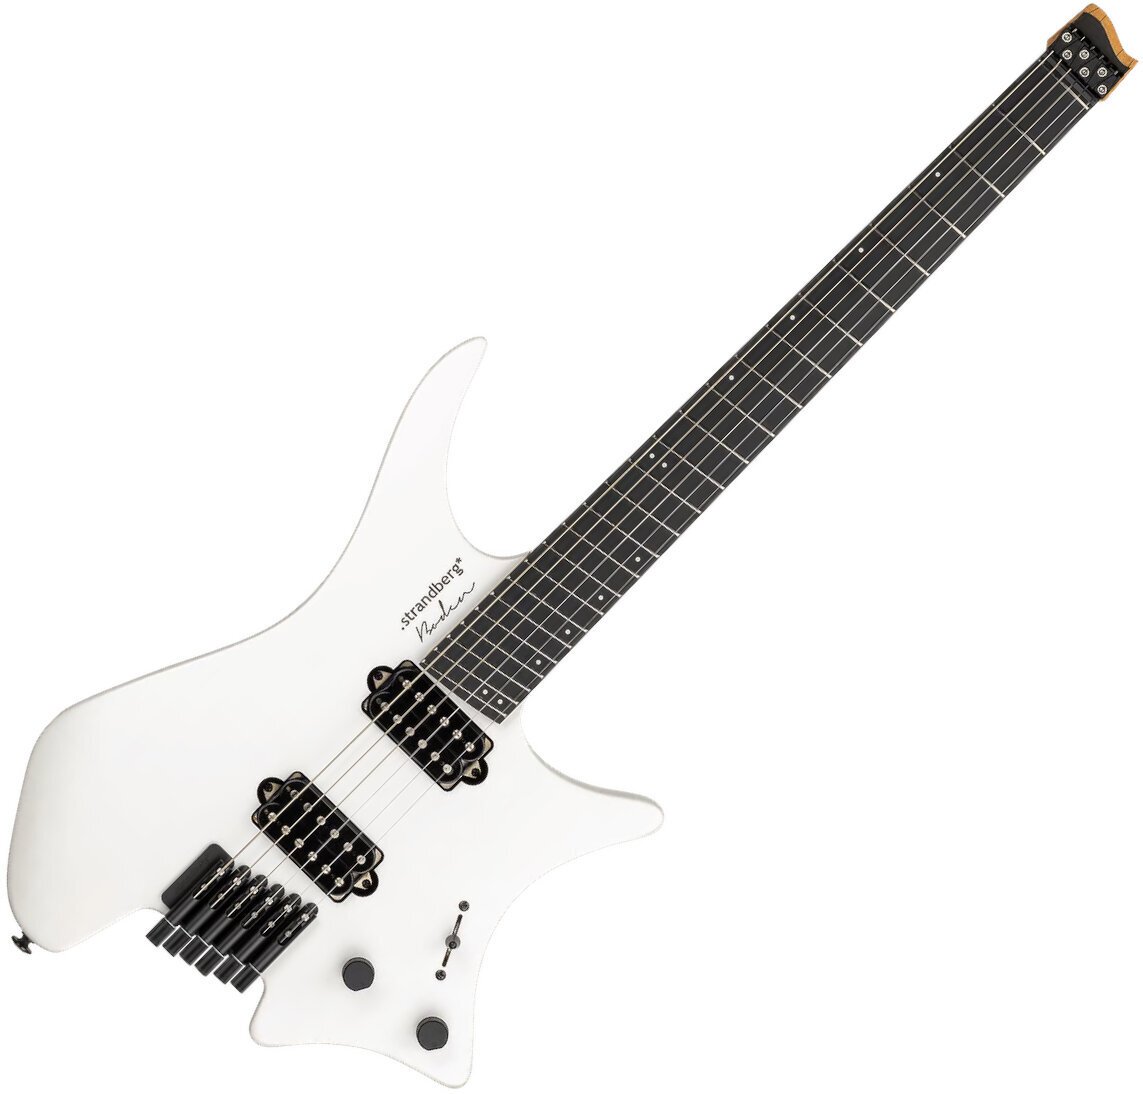 Headless guitar Strandberg Boden Metal NX 6 White Granite